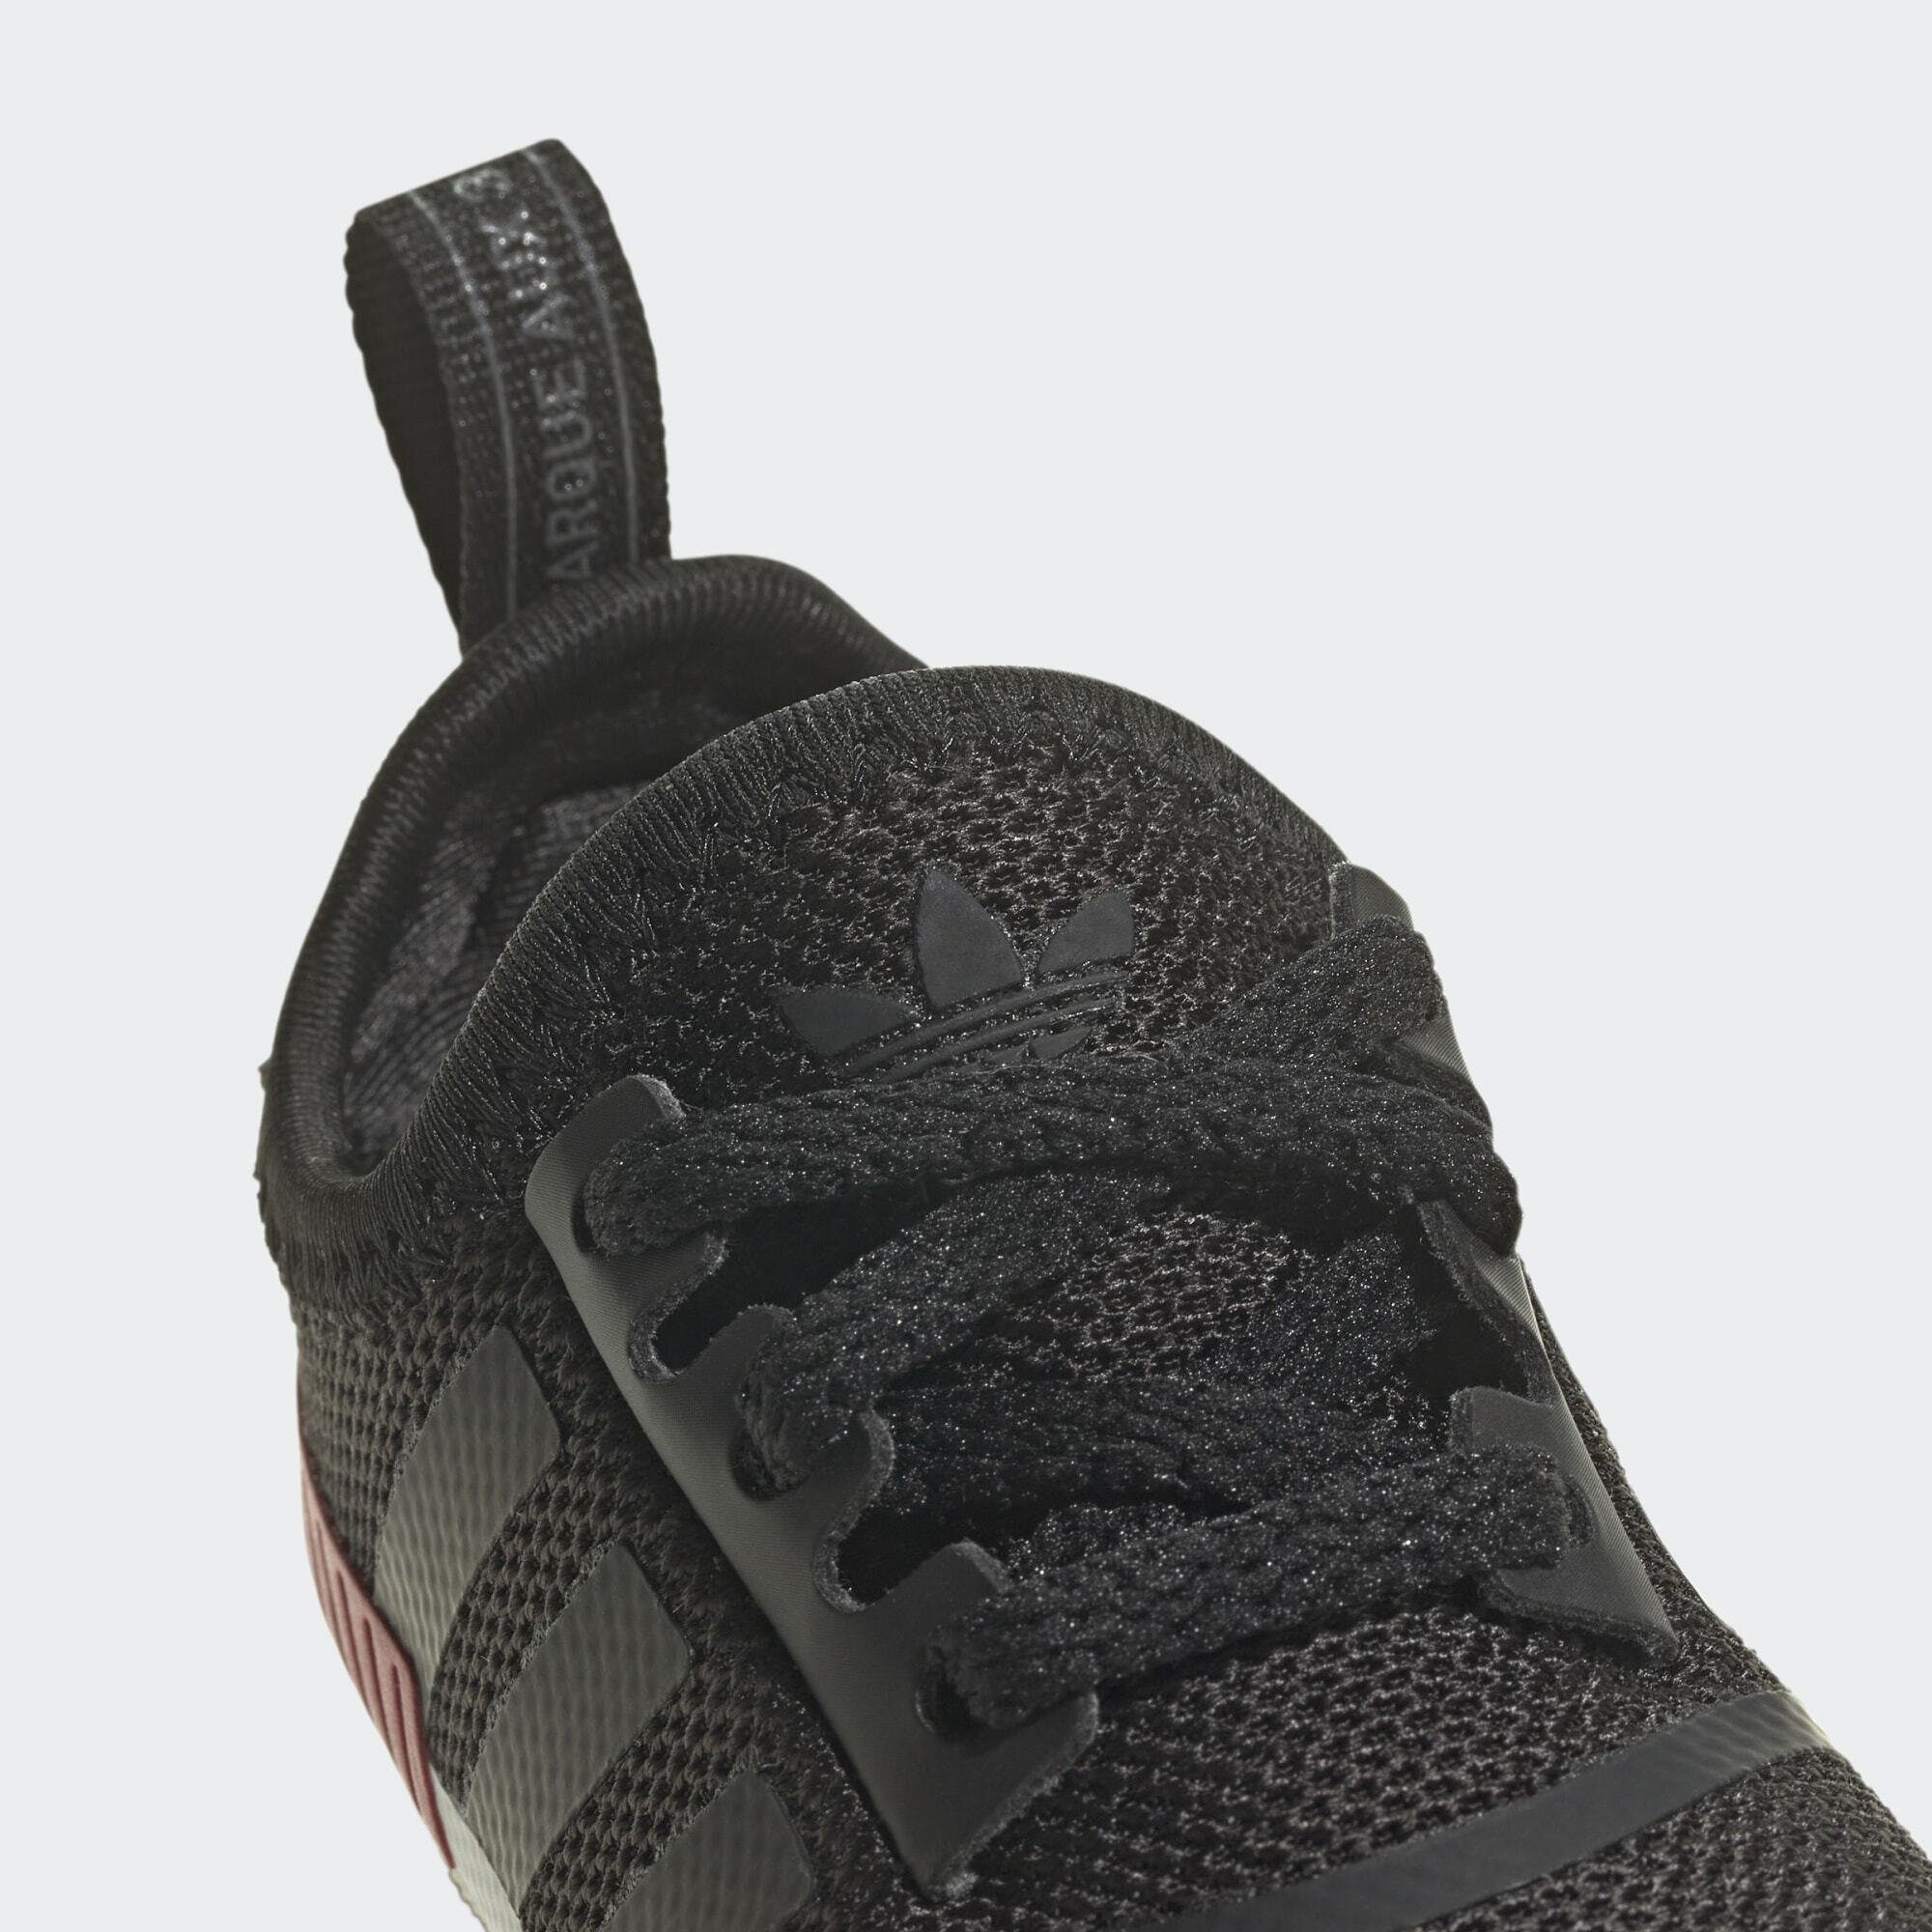 Krabbelschuh Grey adidas Black Black / Core Core SCHUH / Five Originals NMD